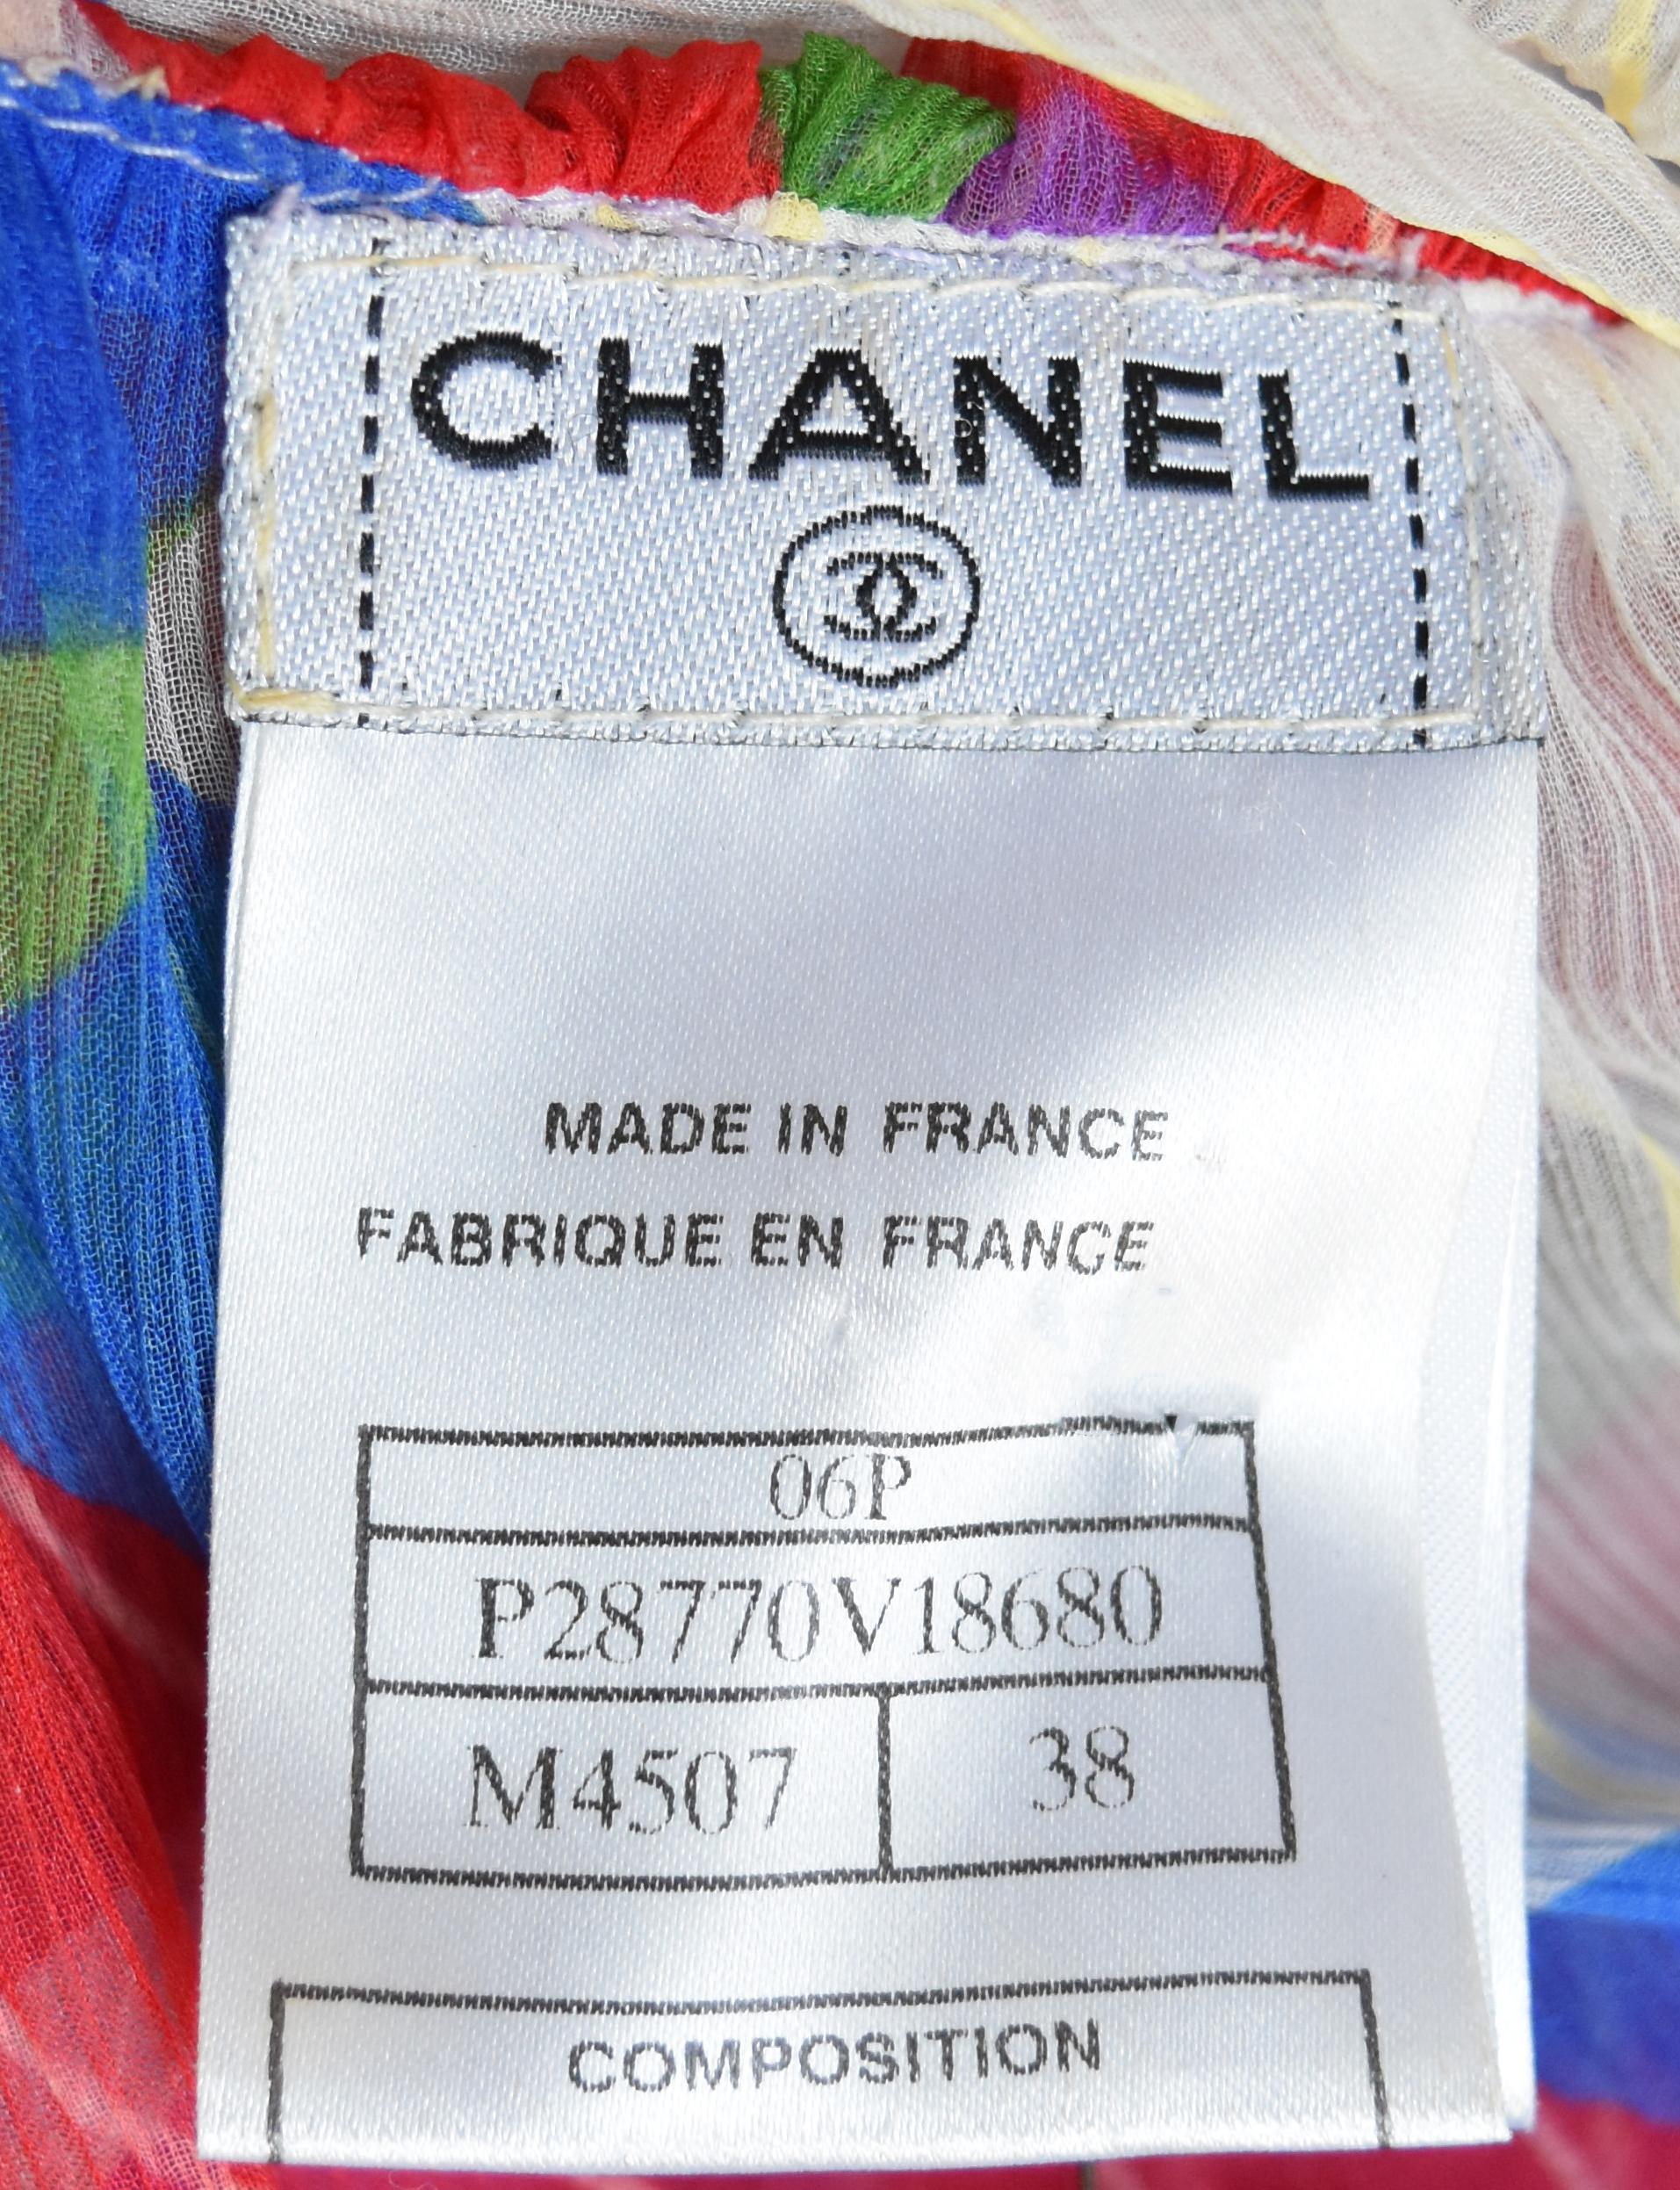 Chanel Chiffon Full Length Abstract Print Runway Dress 06P 2006 For Sale 5